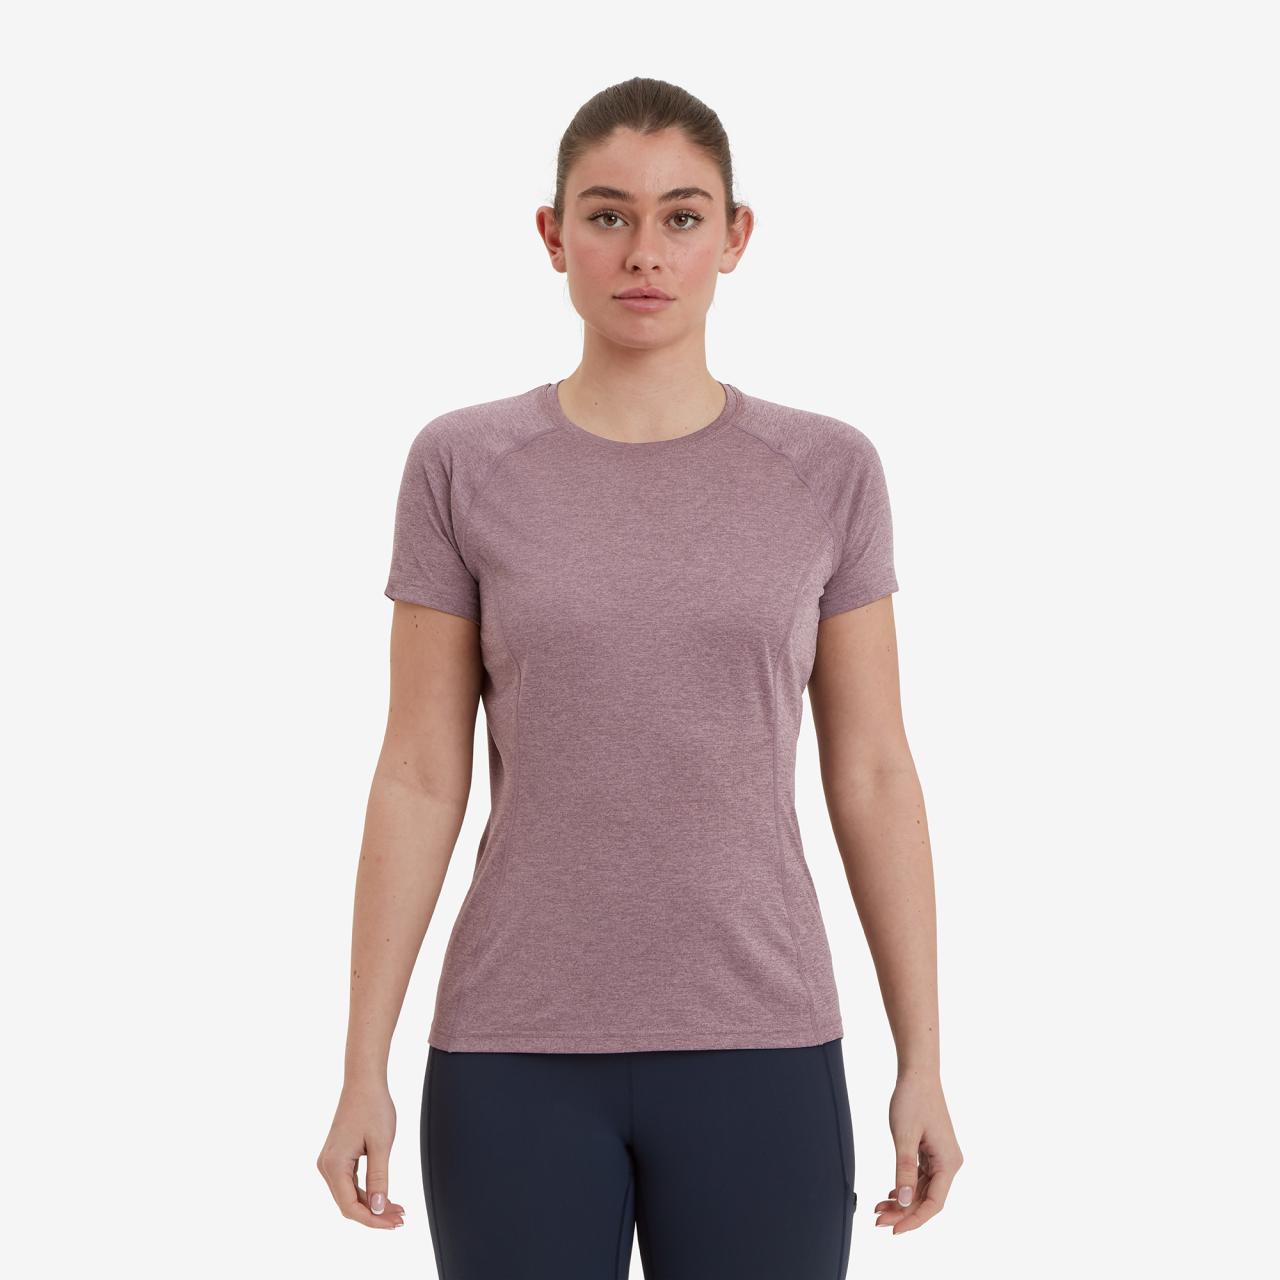 FEM DART T-SHIRT-MOONSCAPE-UK10/S dámské triko šedofialové